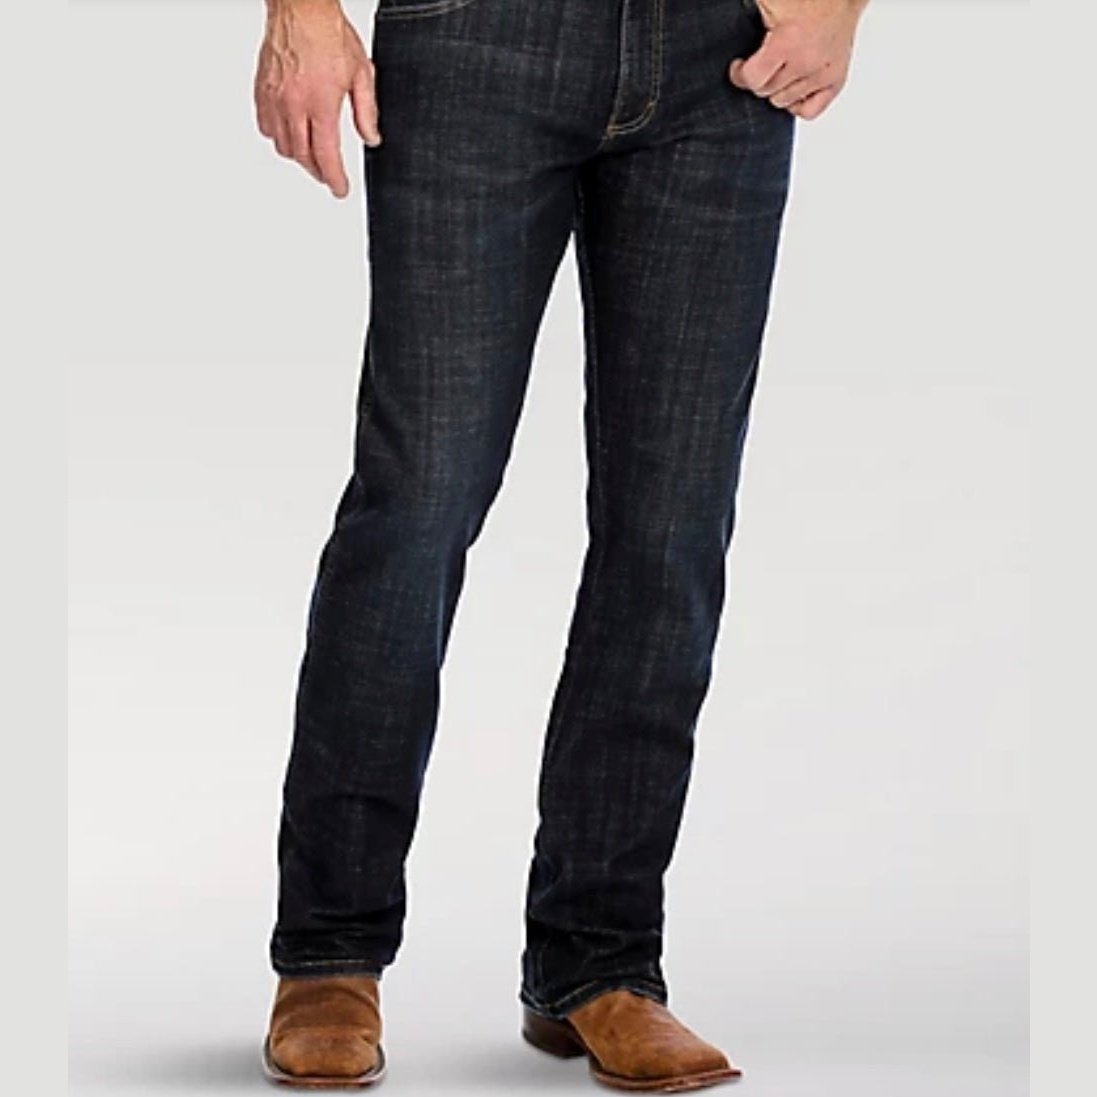 Wrangler Men's Jeans Retro Slim Fit Boot Cut 77MWZDX - Wrangler